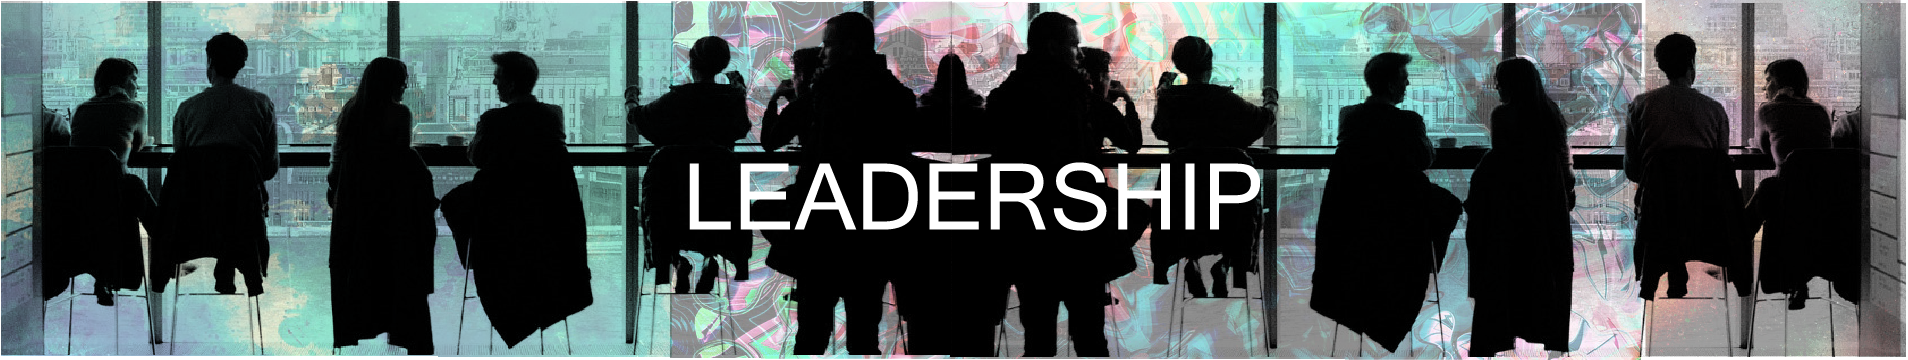 Leadership-Banner-4